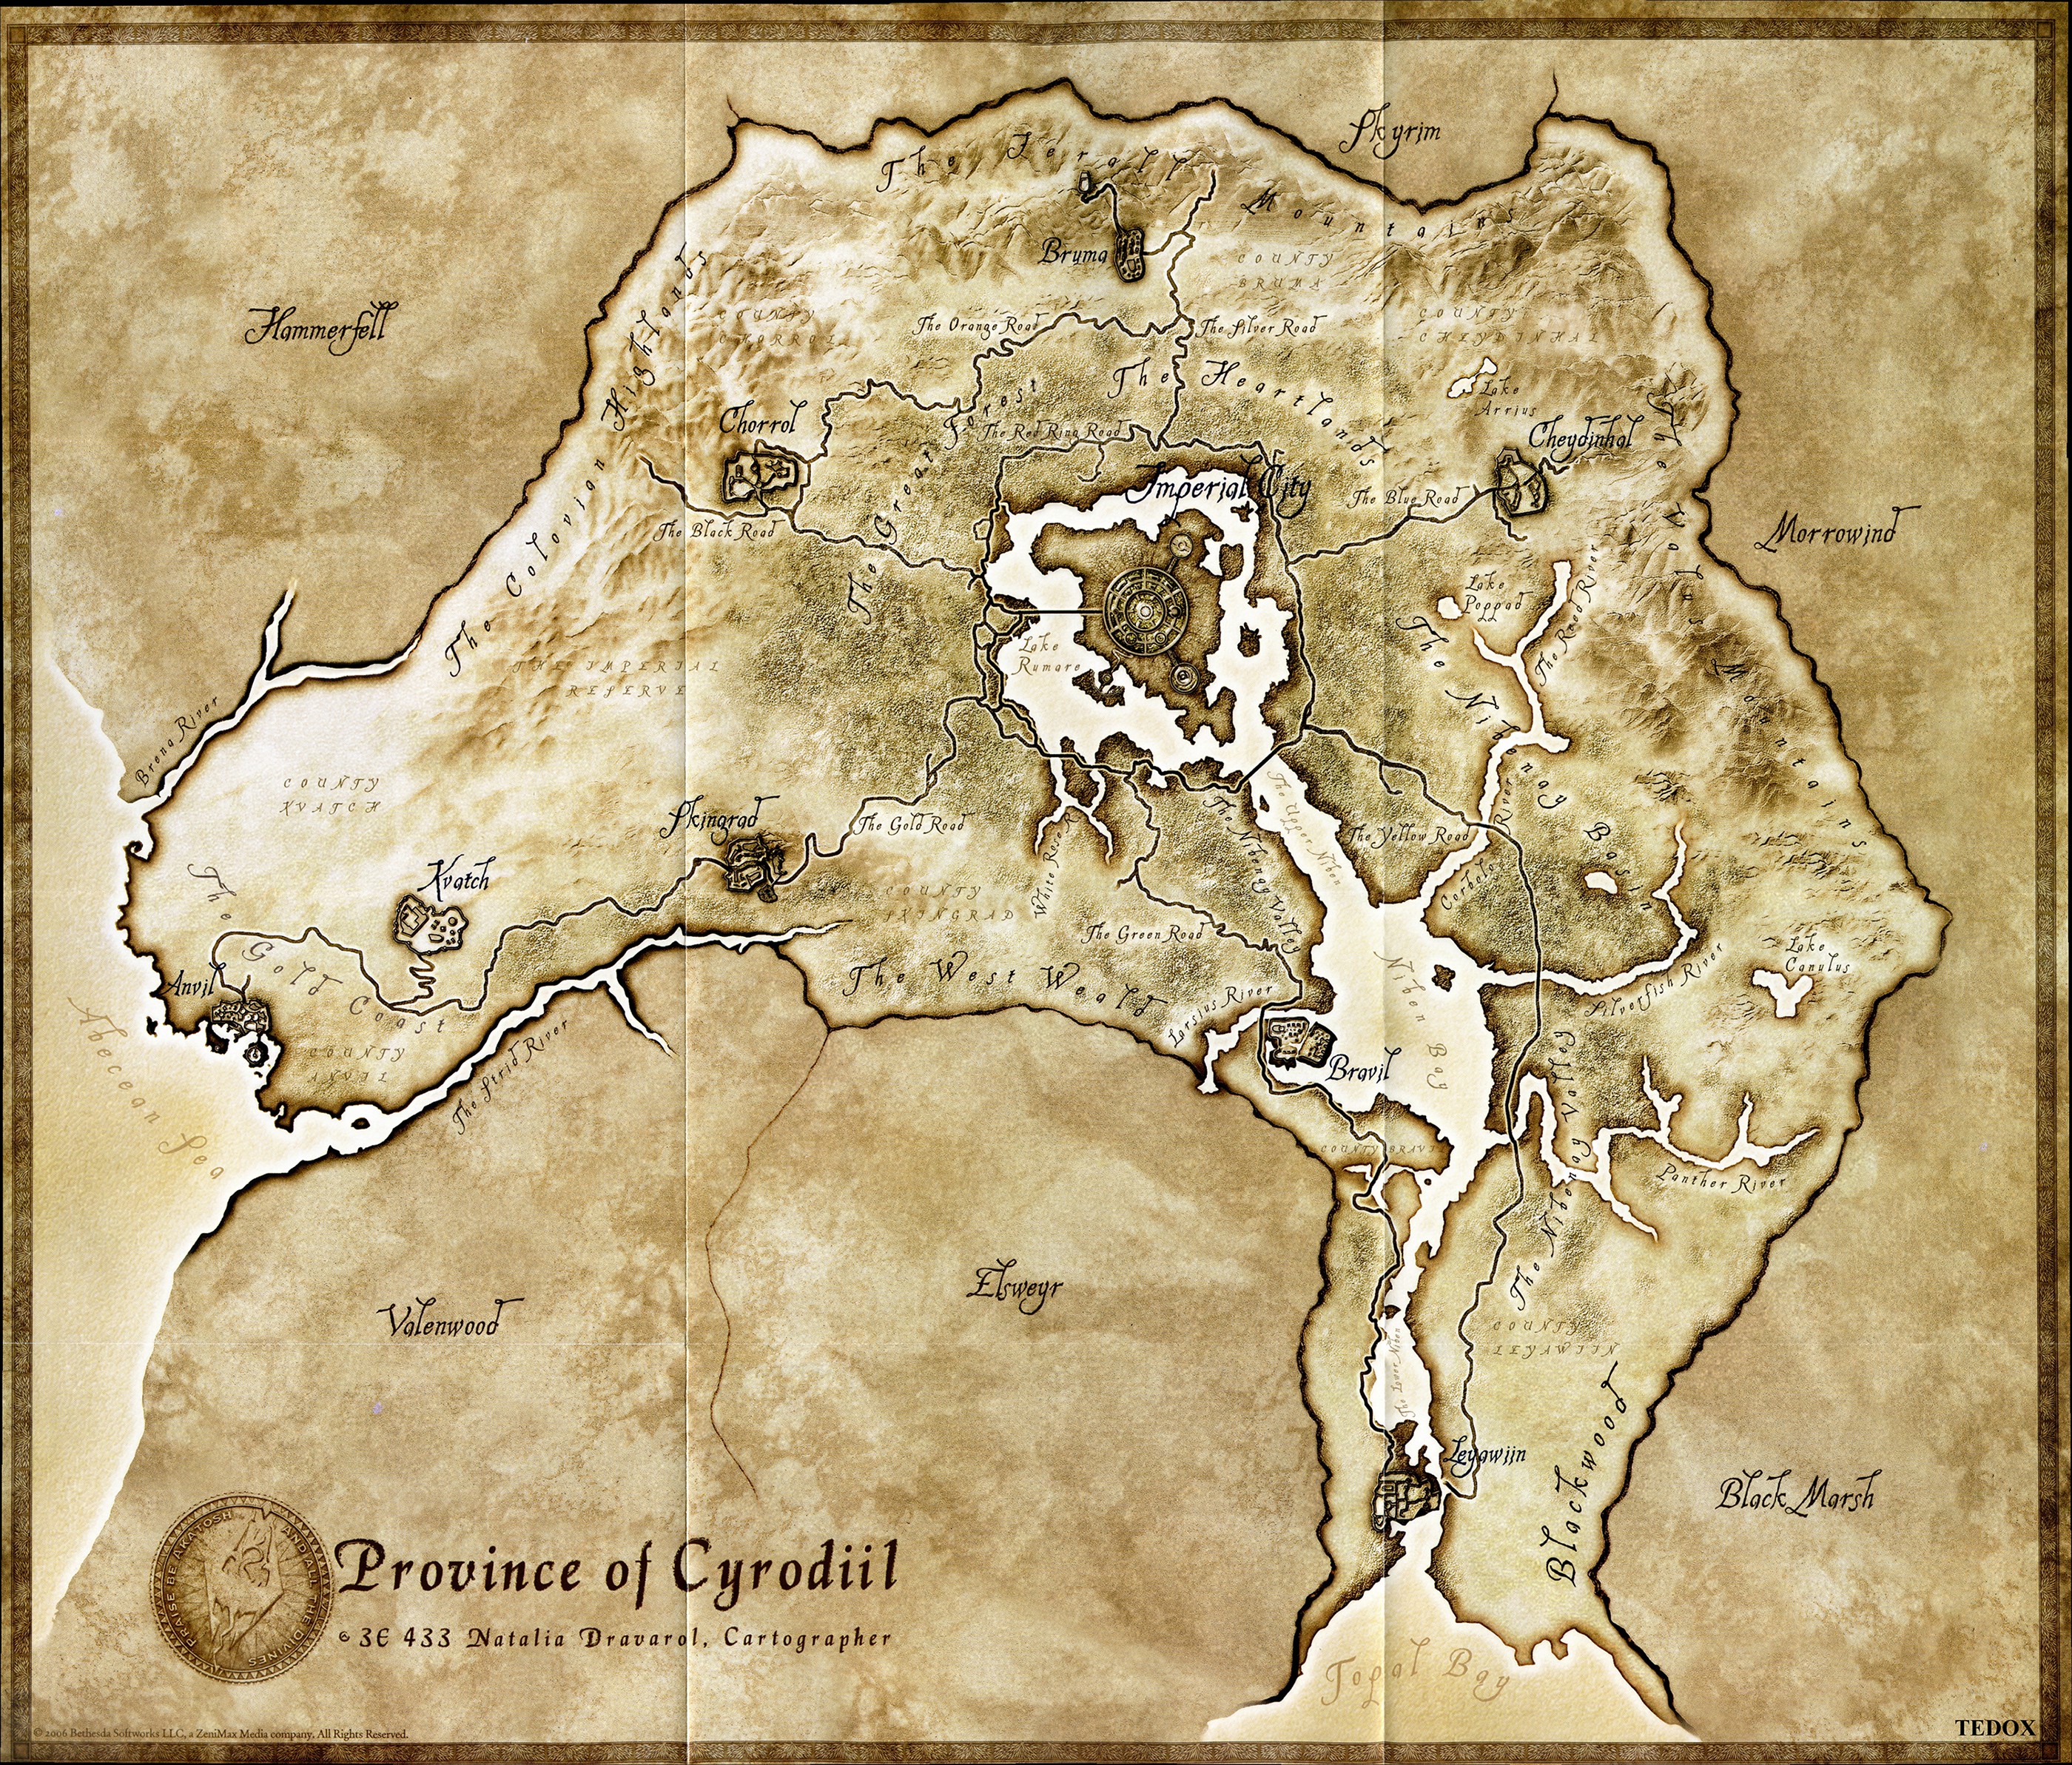 General 2800x2385 video games The Elder Scrolls IV: Oblivion The Elder Scrolls RPG PC gaming map